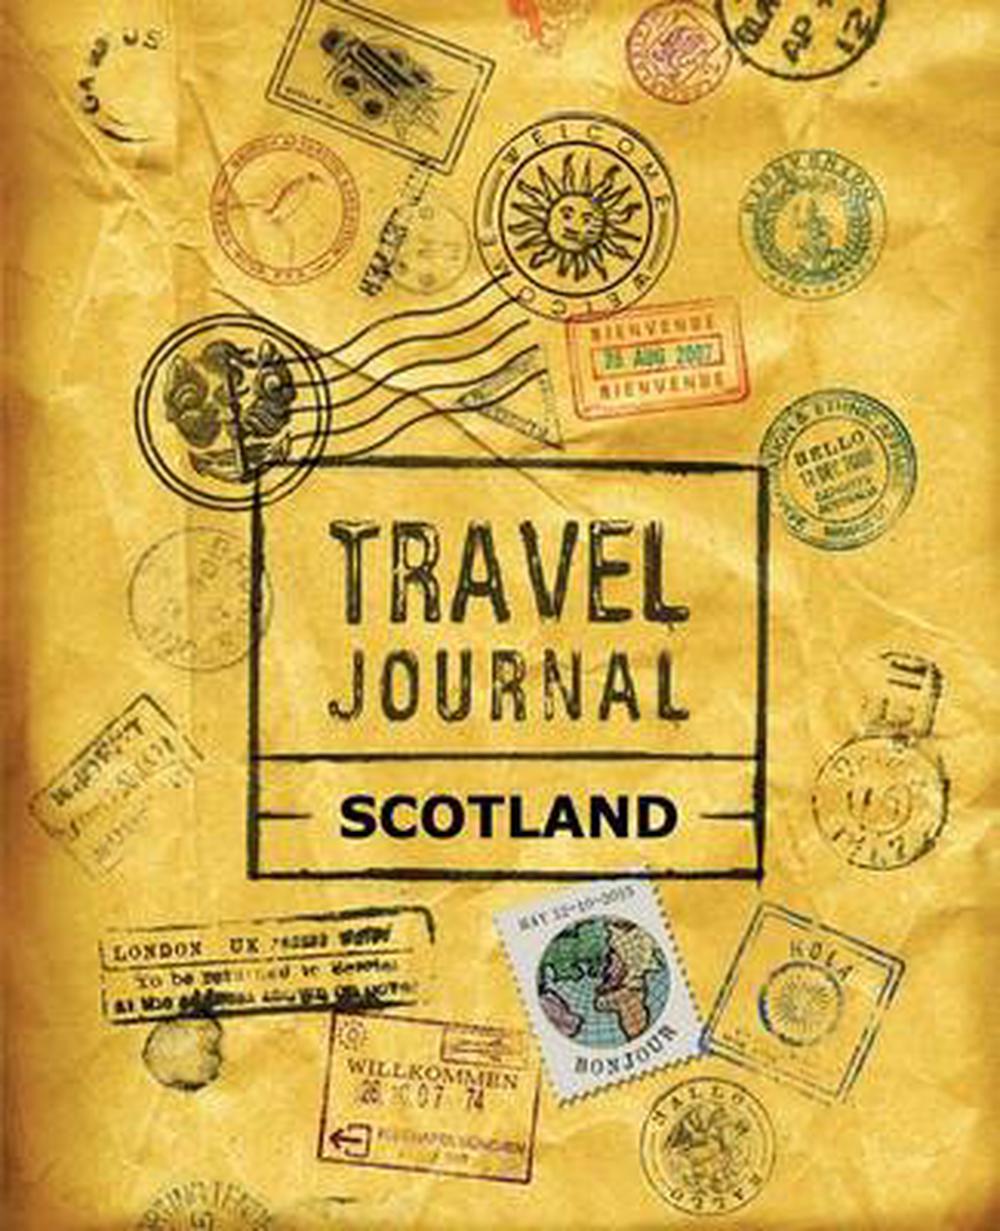 travel book on scotland